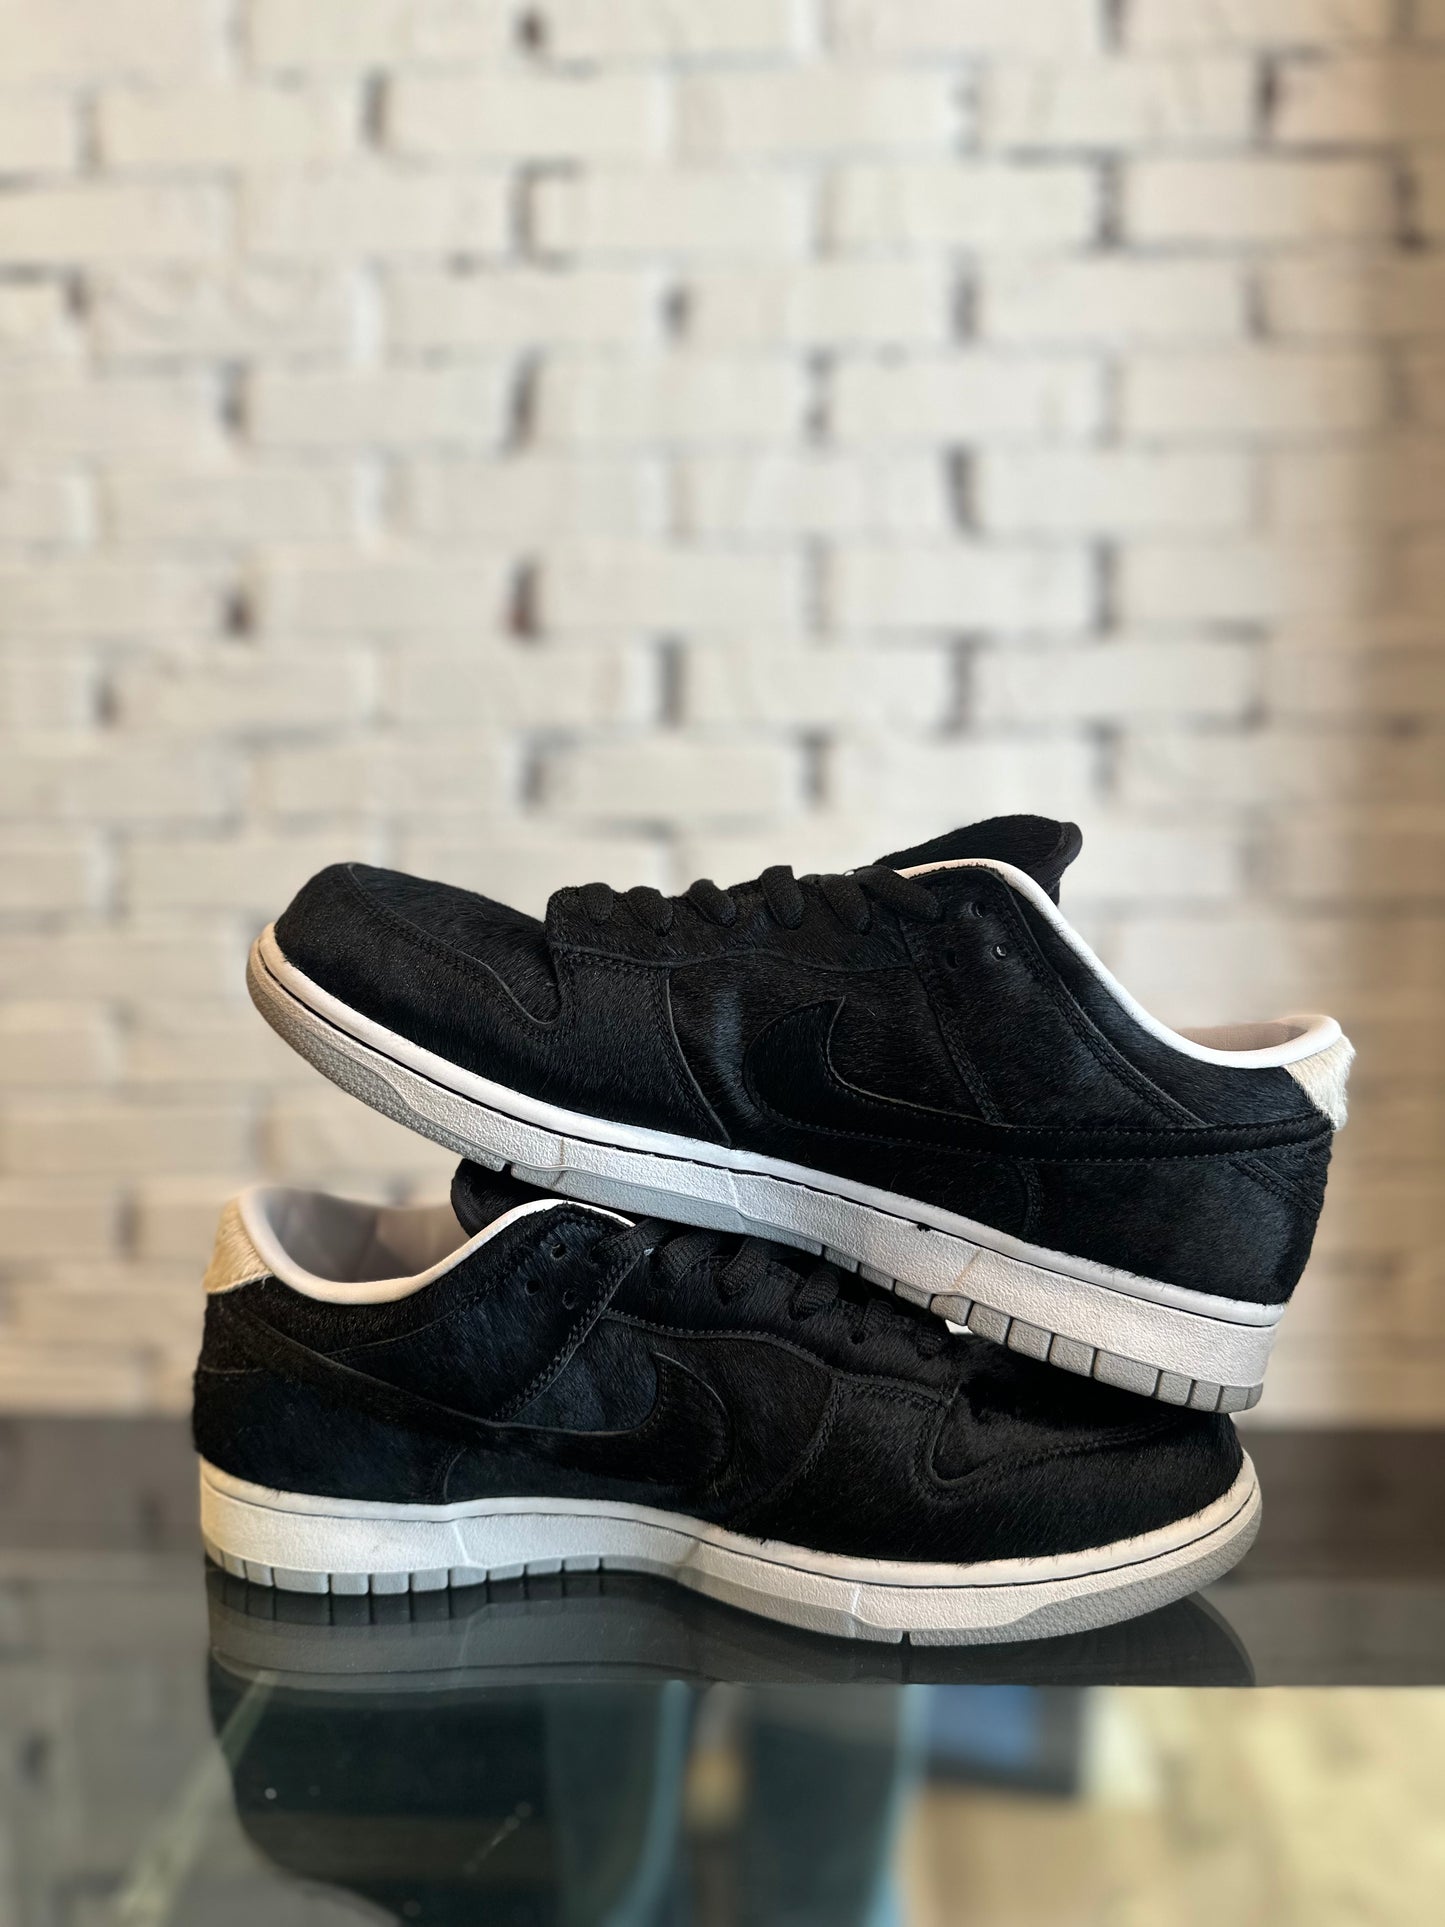 Nike SB Dunk Low “@Bearbrick” Size 11.5 PO OG